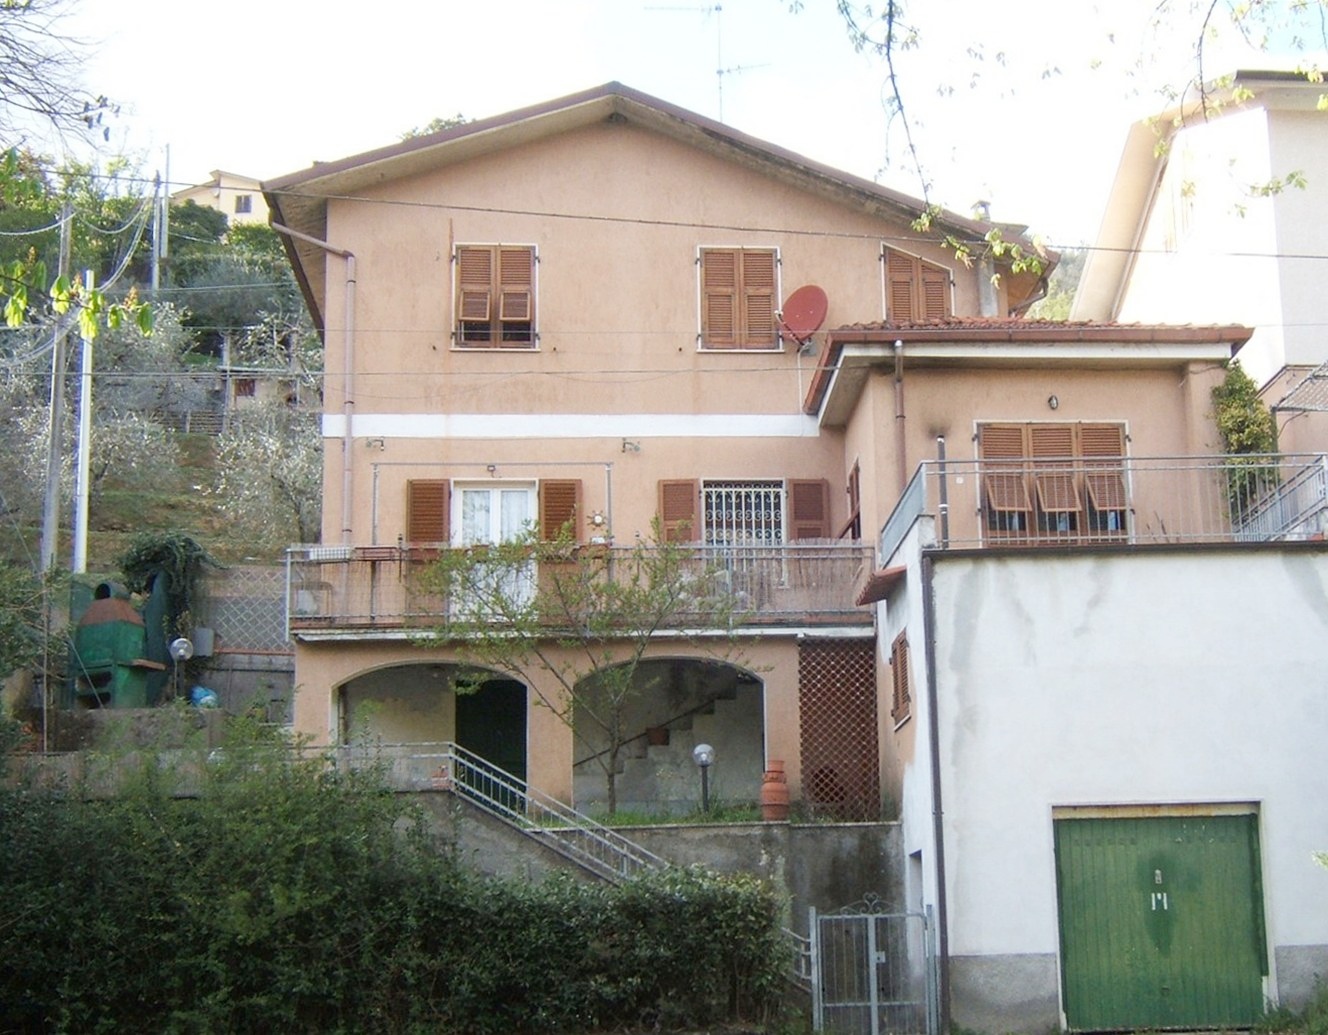 Property near the town of Licciana Nardi